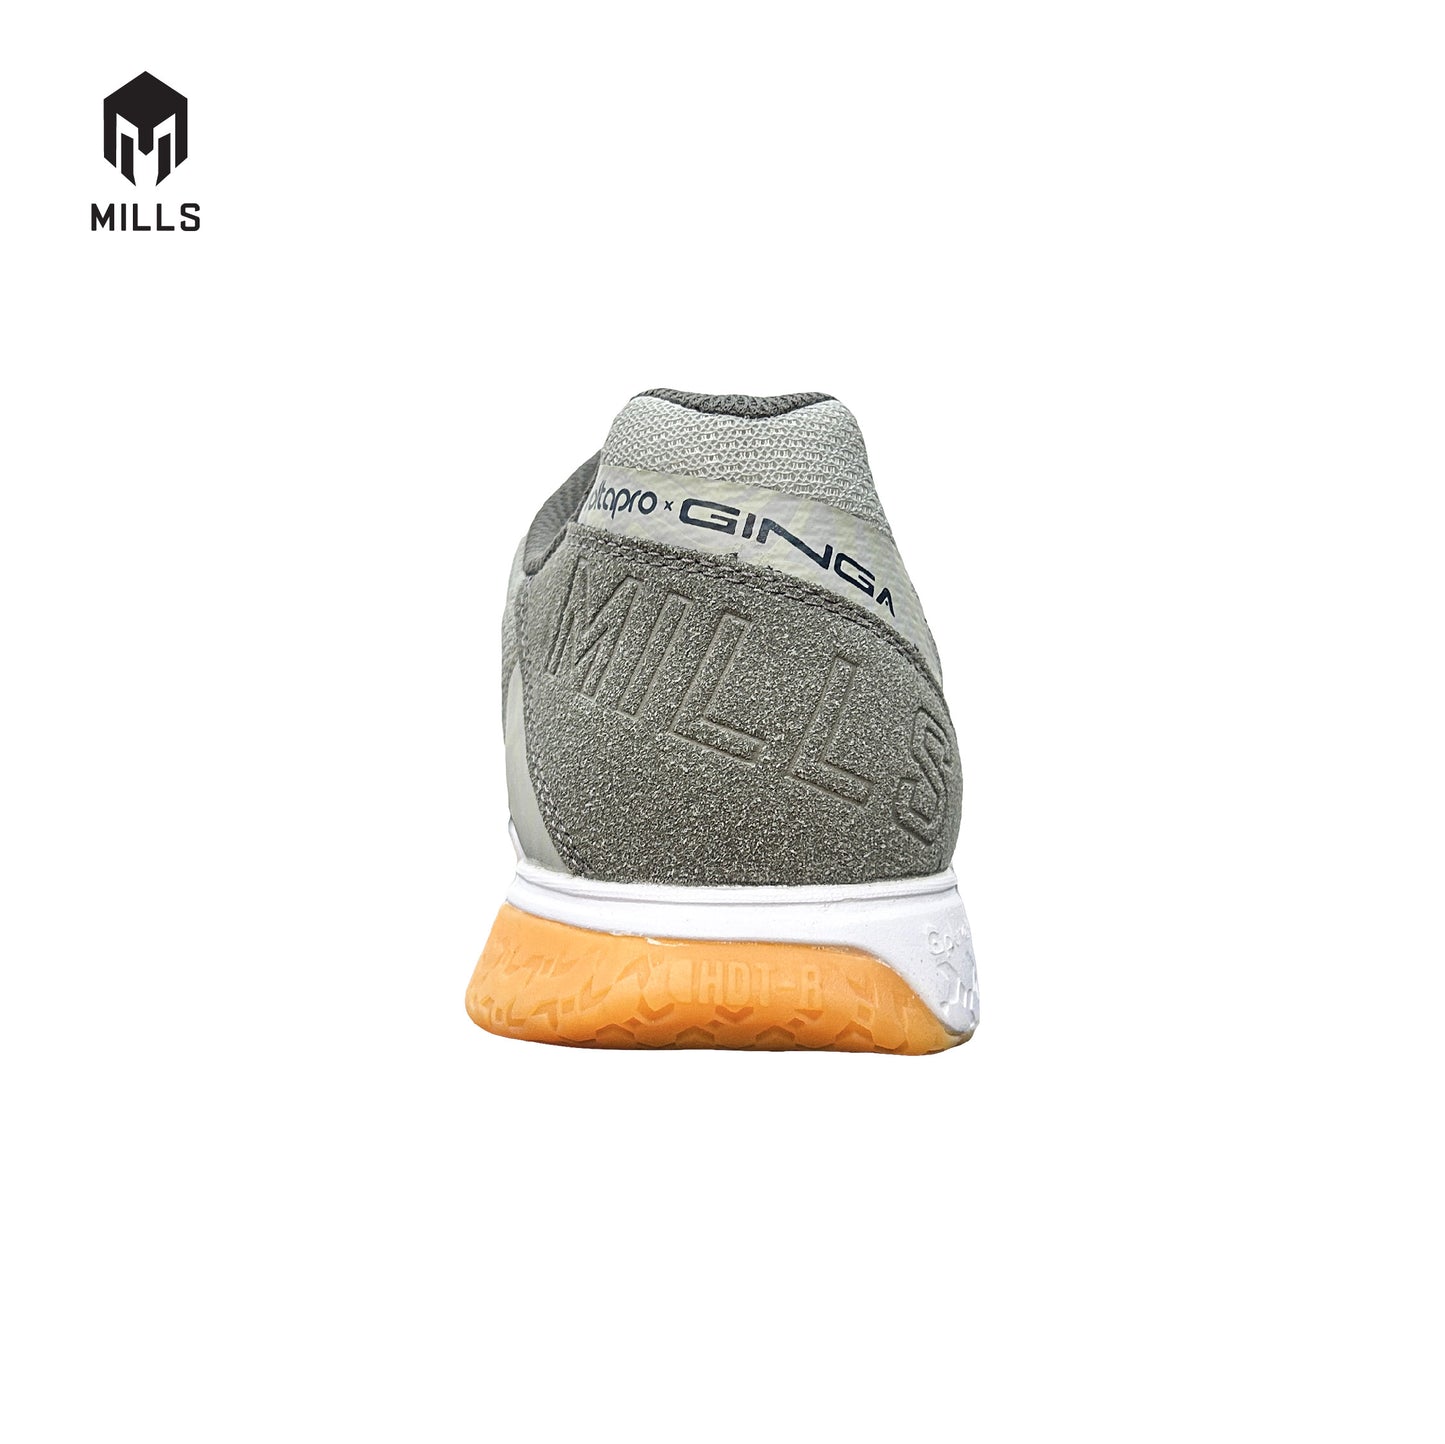 MILLS Sepatu Futsal Voltapro Ginga IN Grey / Orange / Navy 9500107